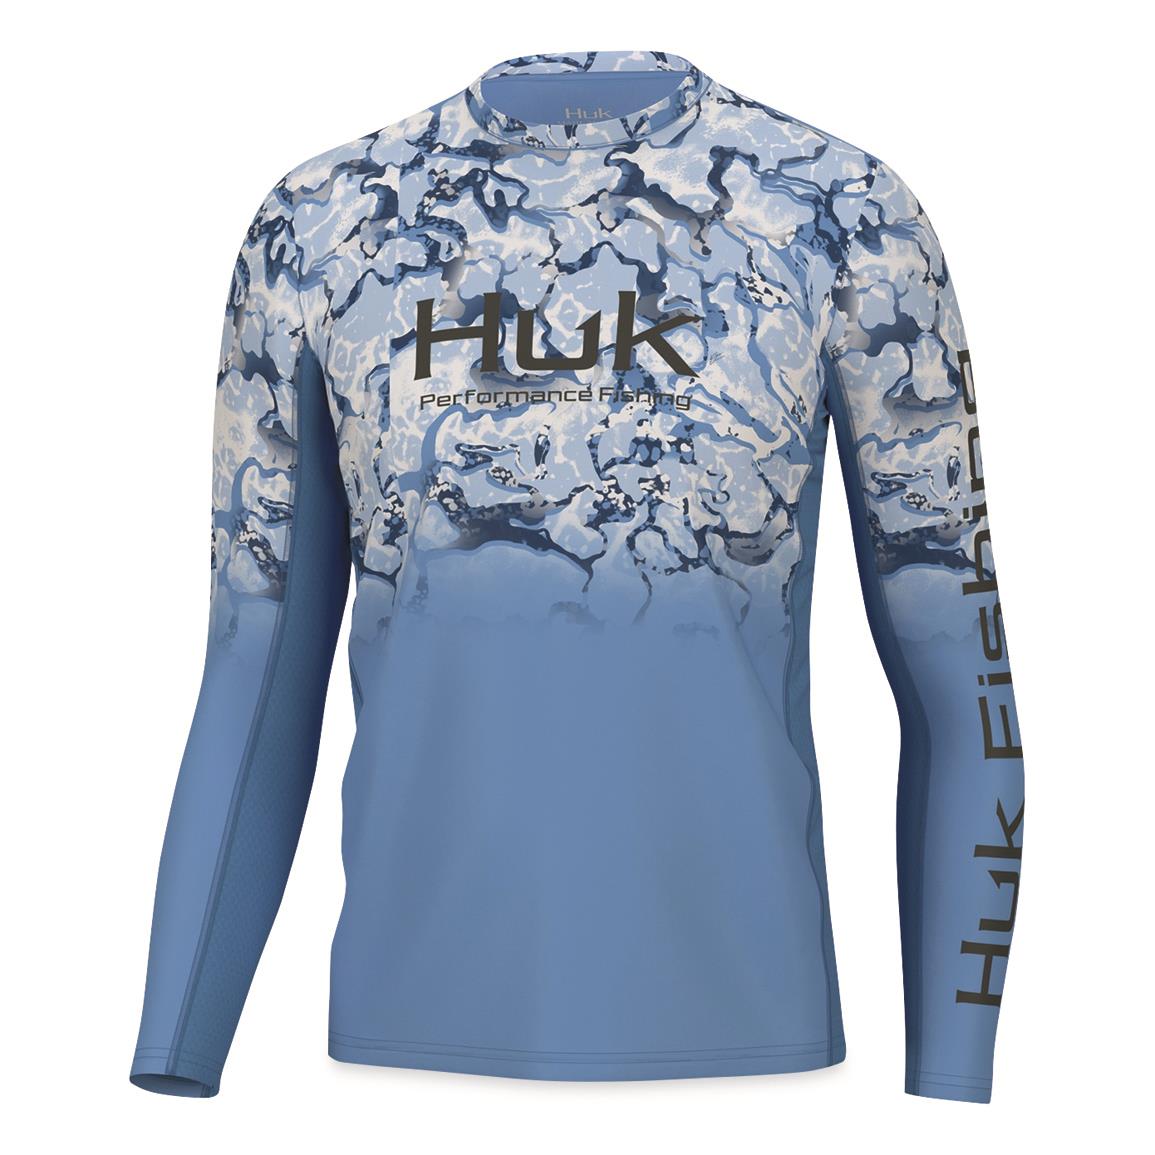 Huk Men's Icon x Inside Reef Fade Shirt - Long Sleeve - Azure Blue